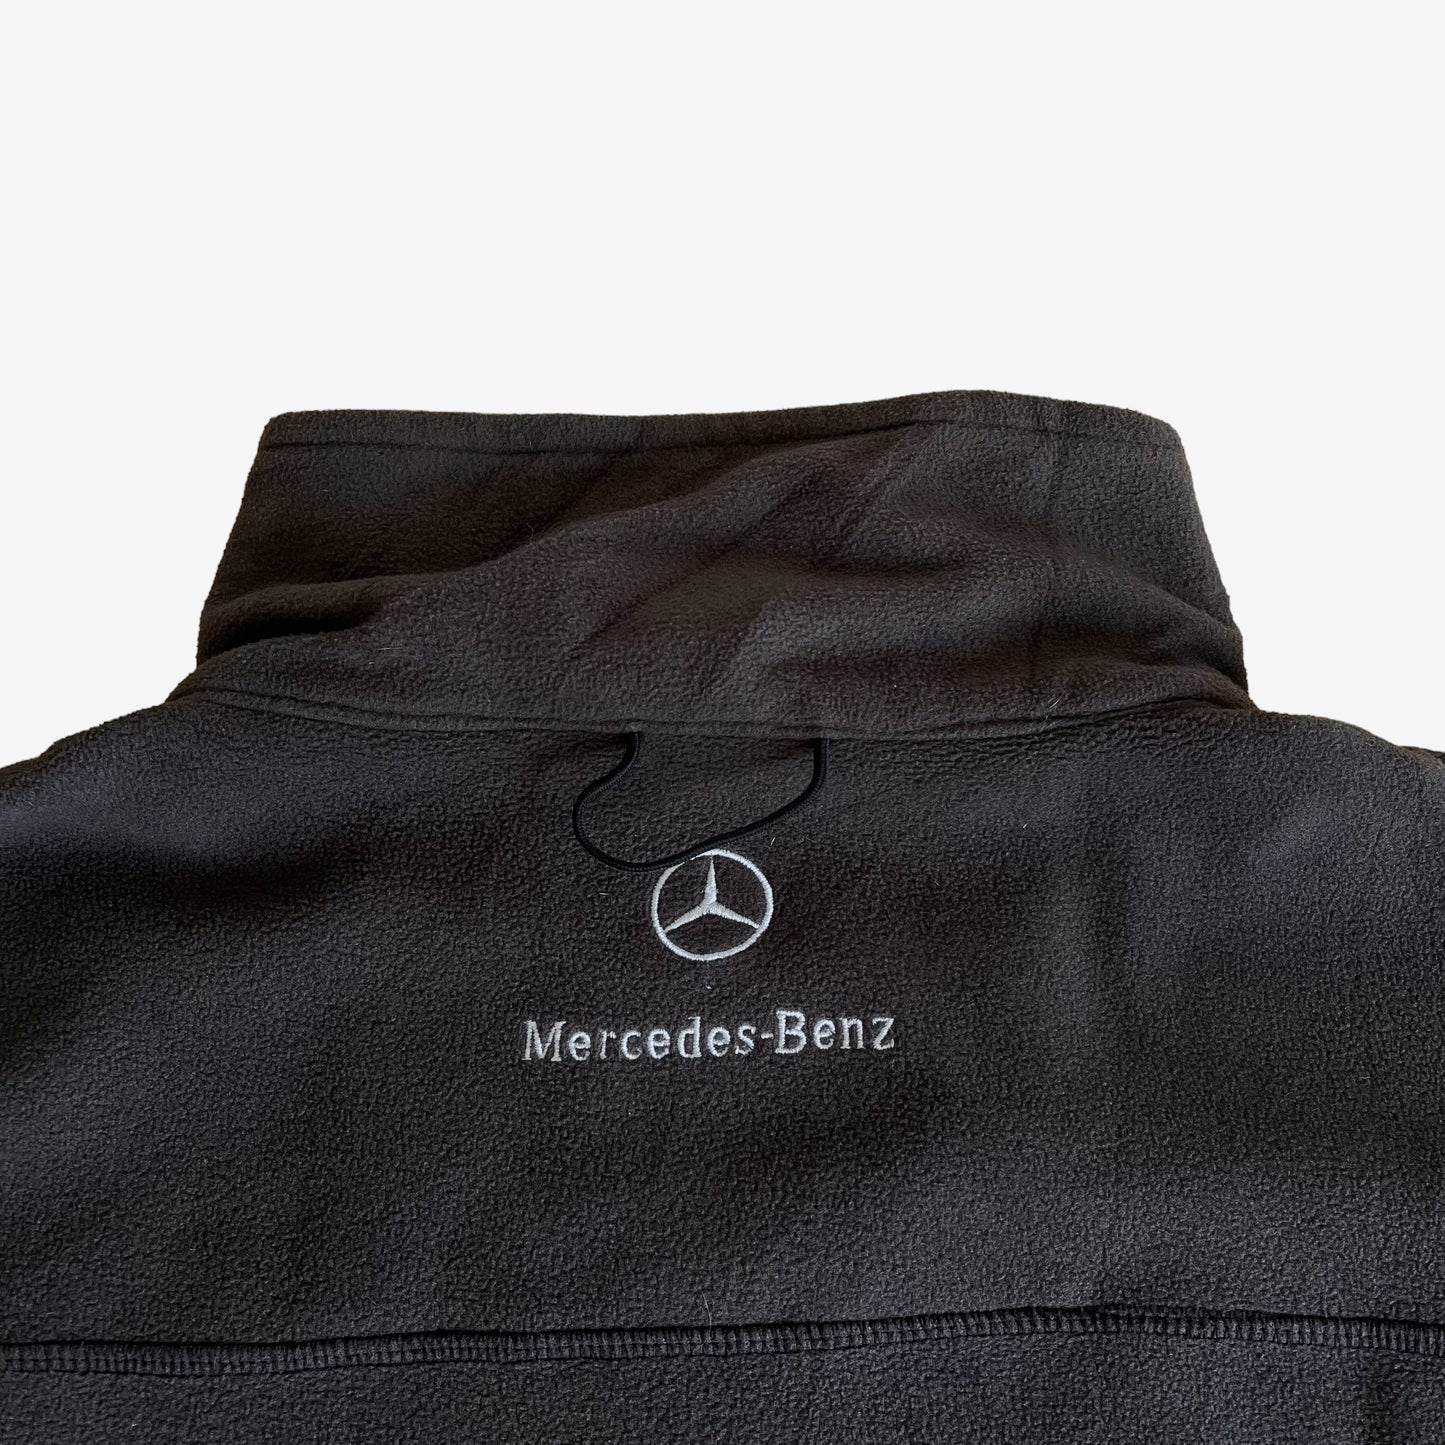 Vintage 90s Mercedes Benz Fleece Jacket Collar - Casspios Dream